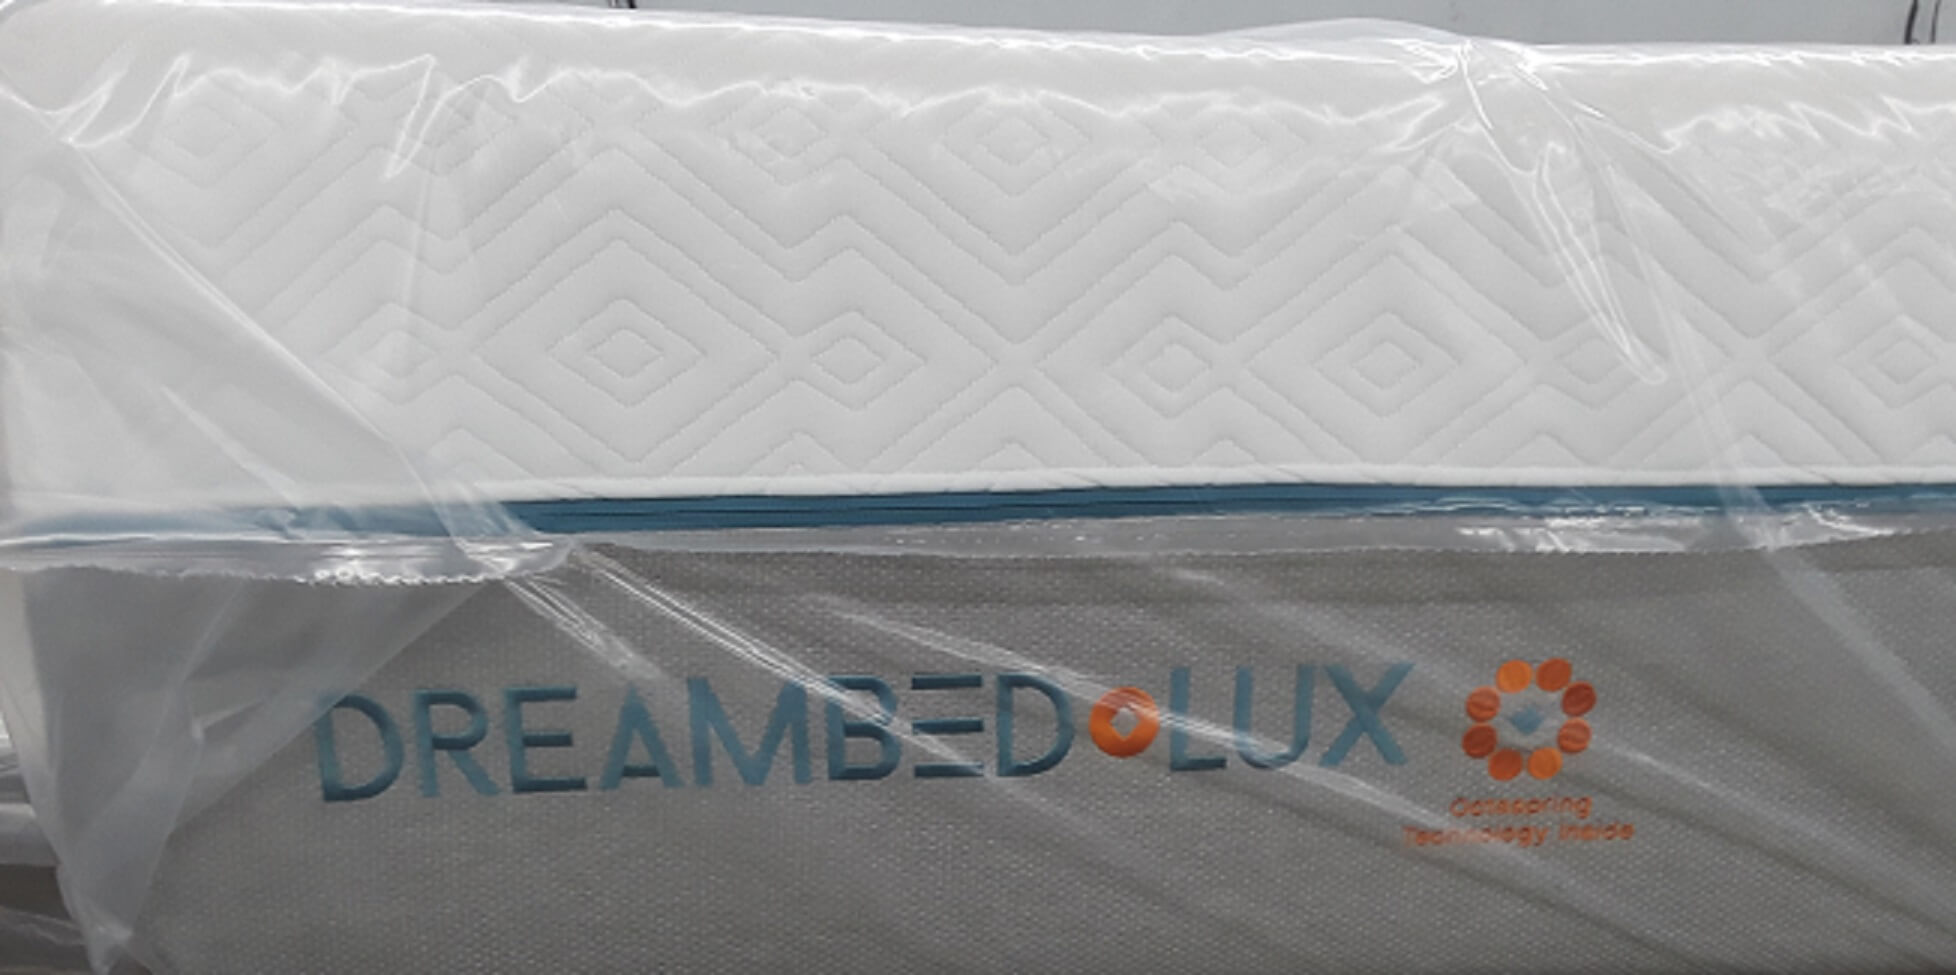 dream bed lux lx 670 14 plush mattress